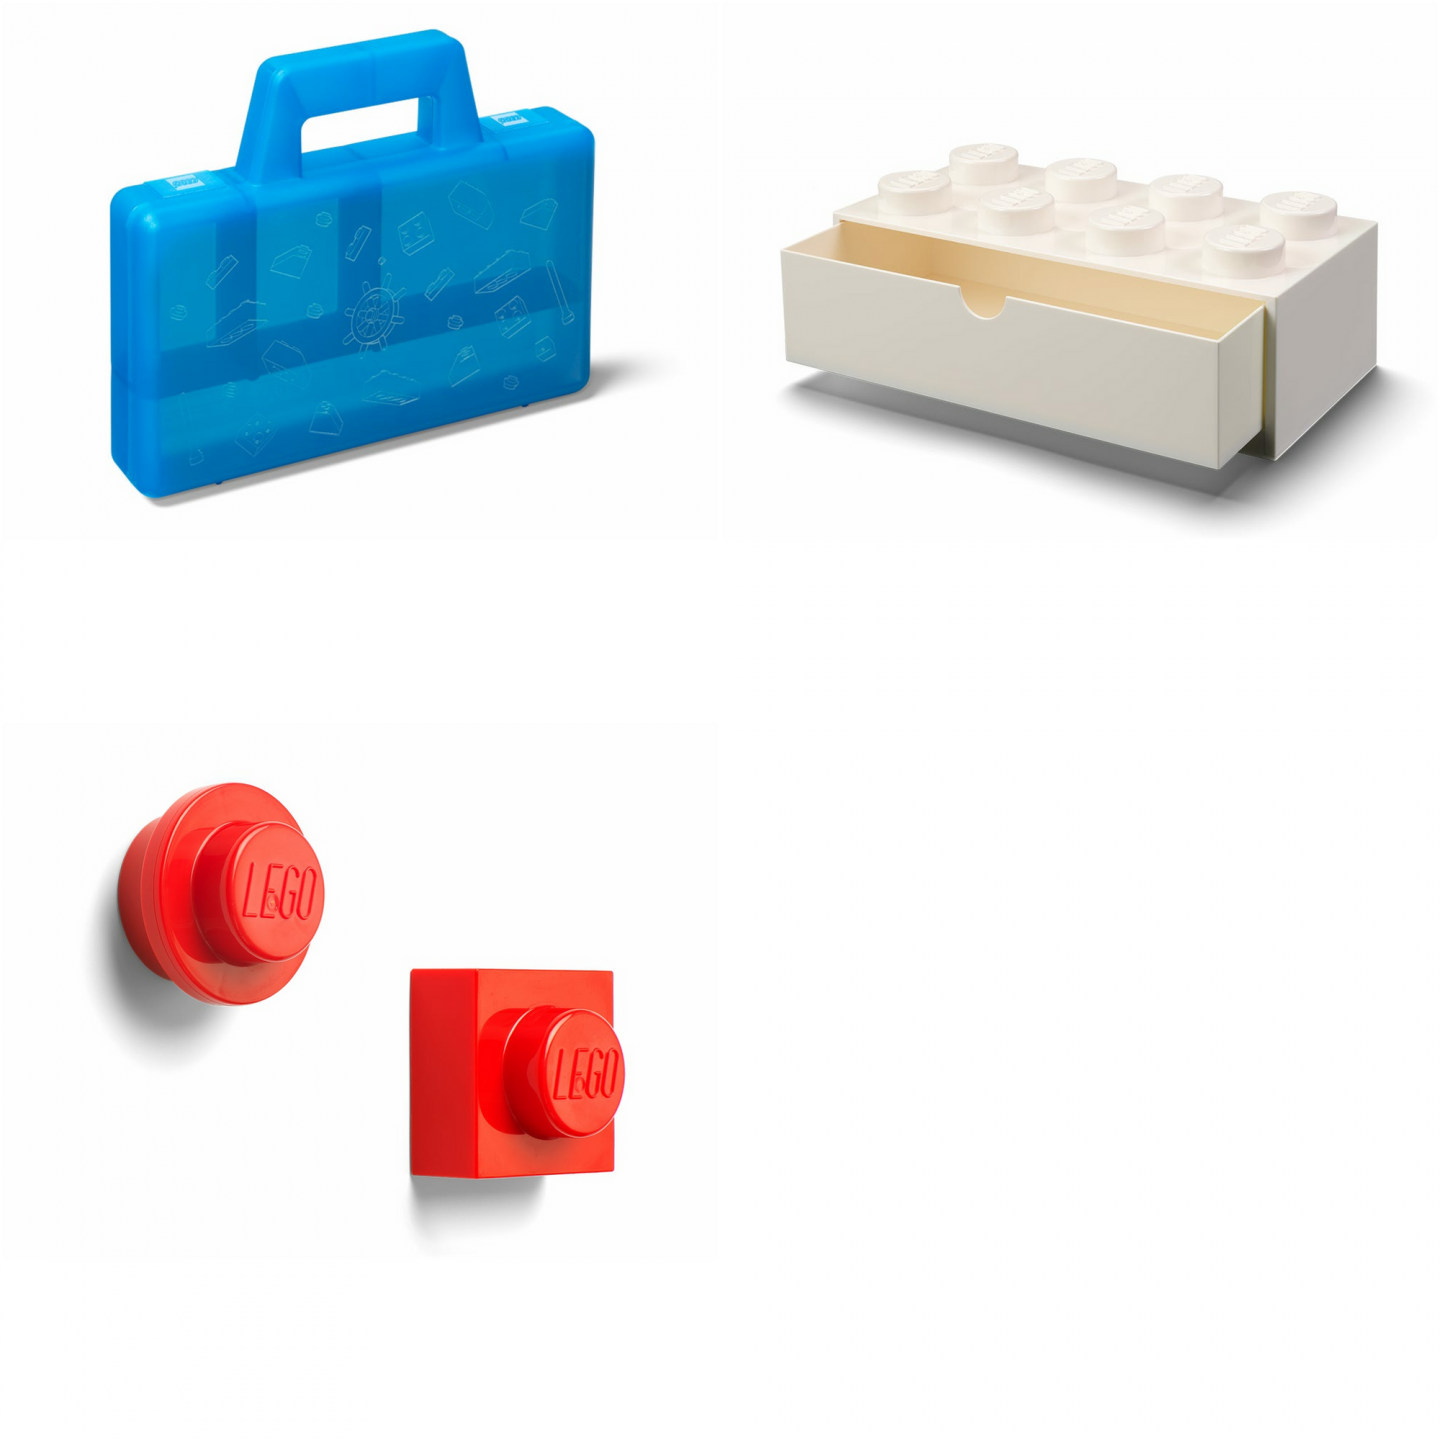 LEGO Sets added on 2022-05-11